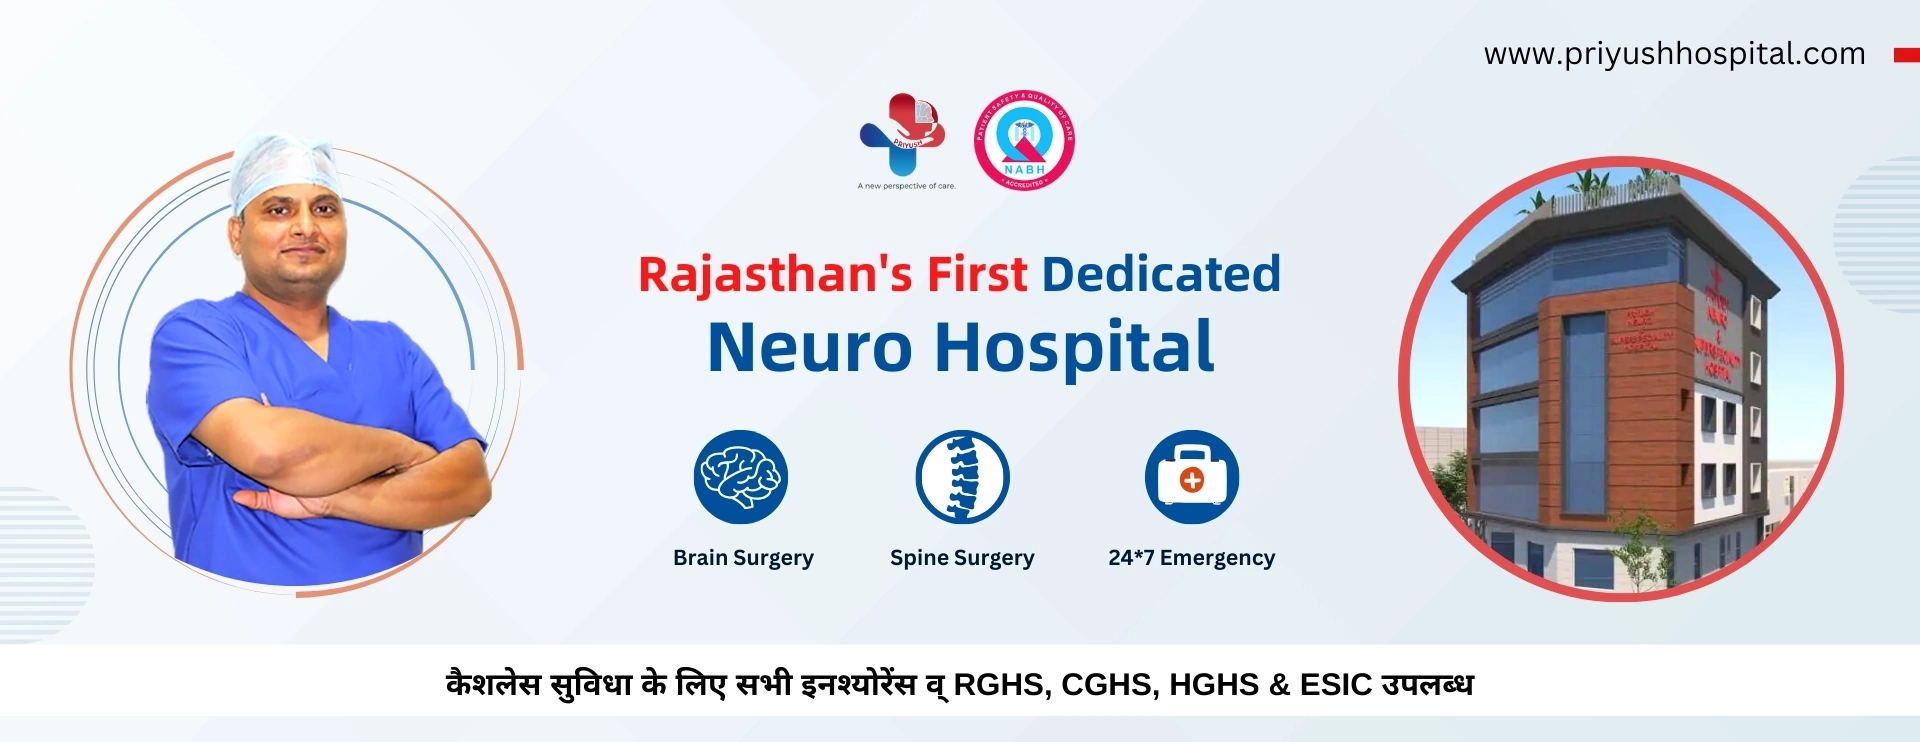 Rajasthan First Dedicated Top Neuro Hospital